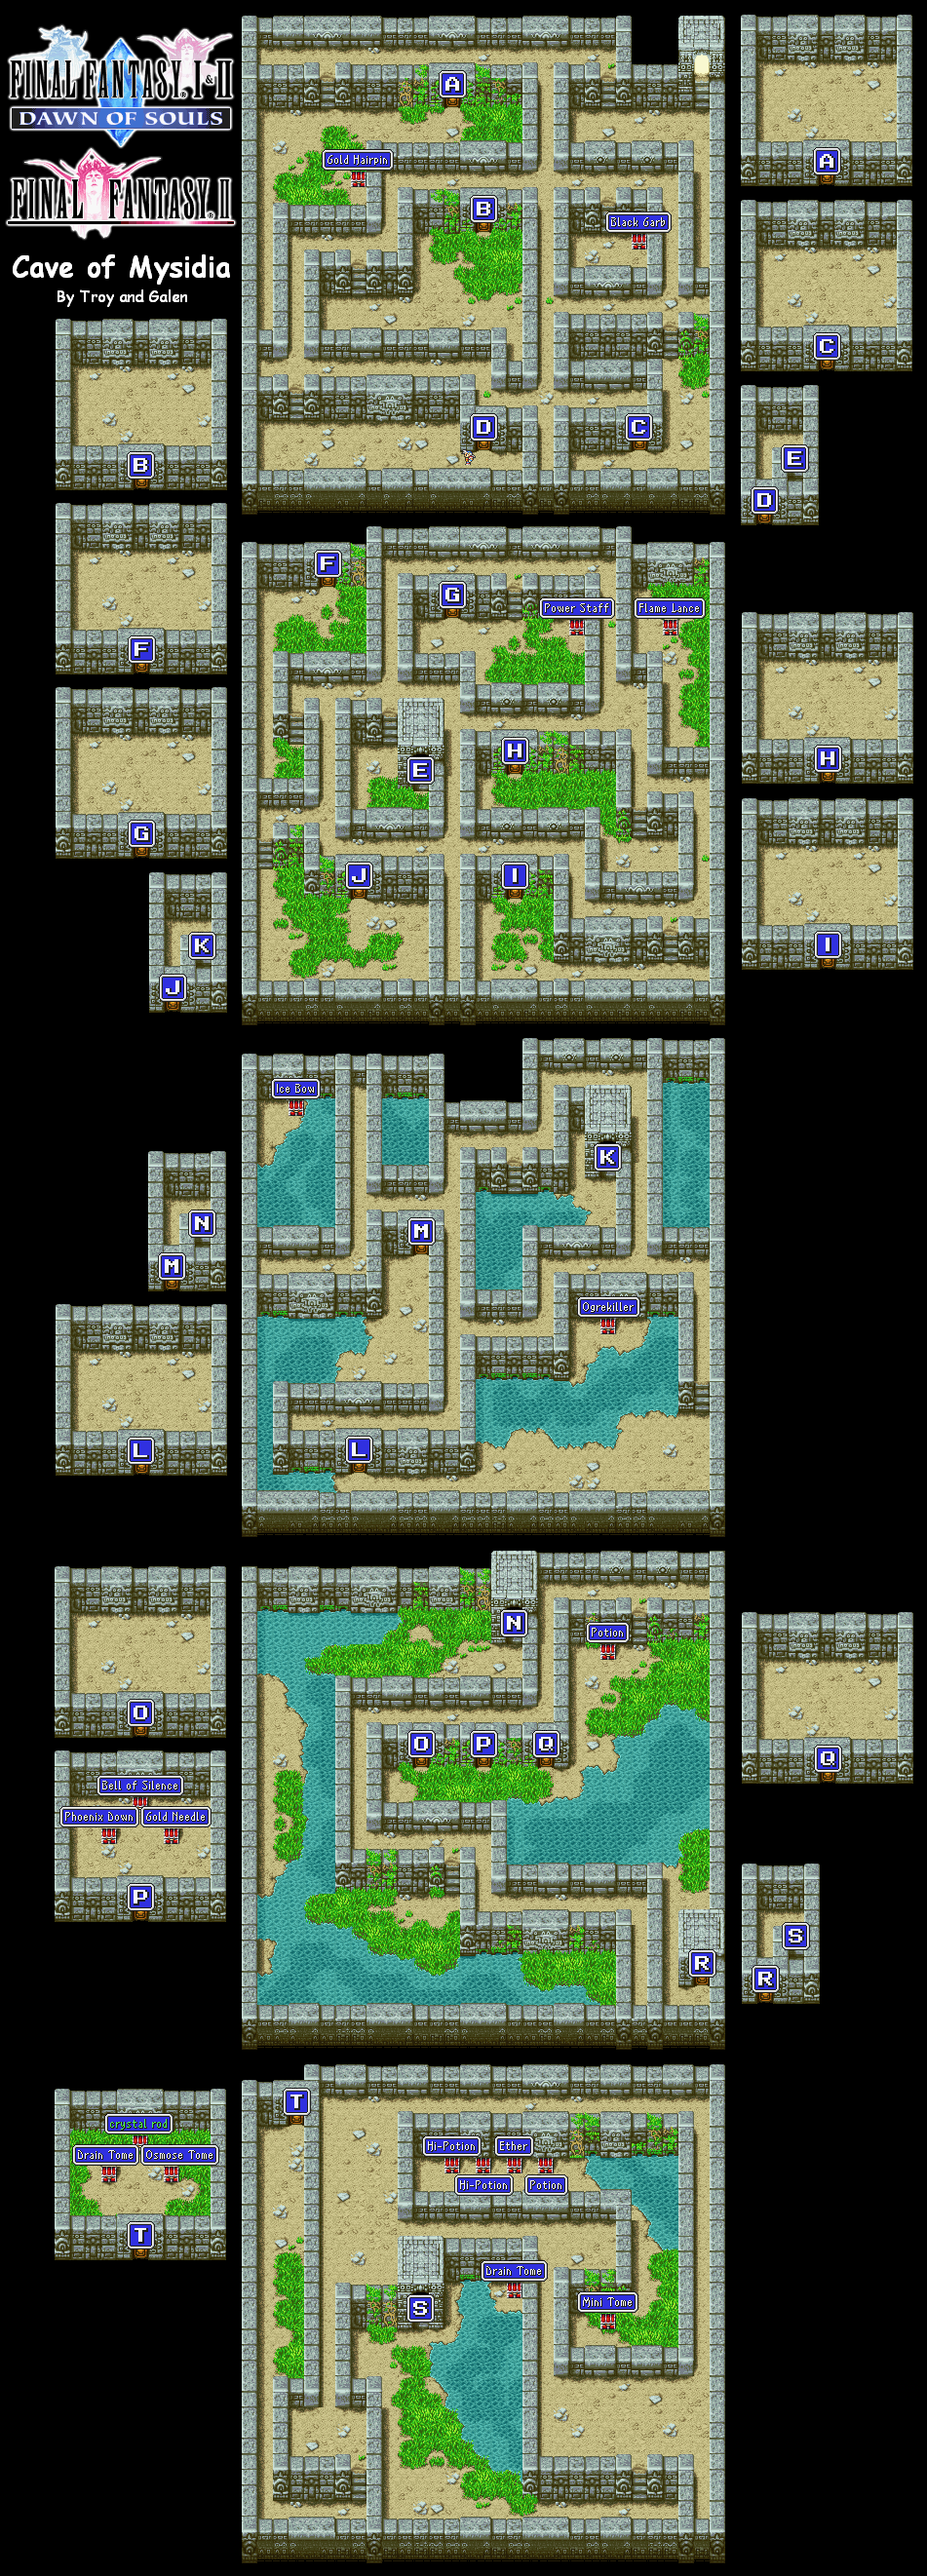 image-ffii-cave-of-mysidia-map-png-final-fantasy-wiki-fandom-powered-by-wikia